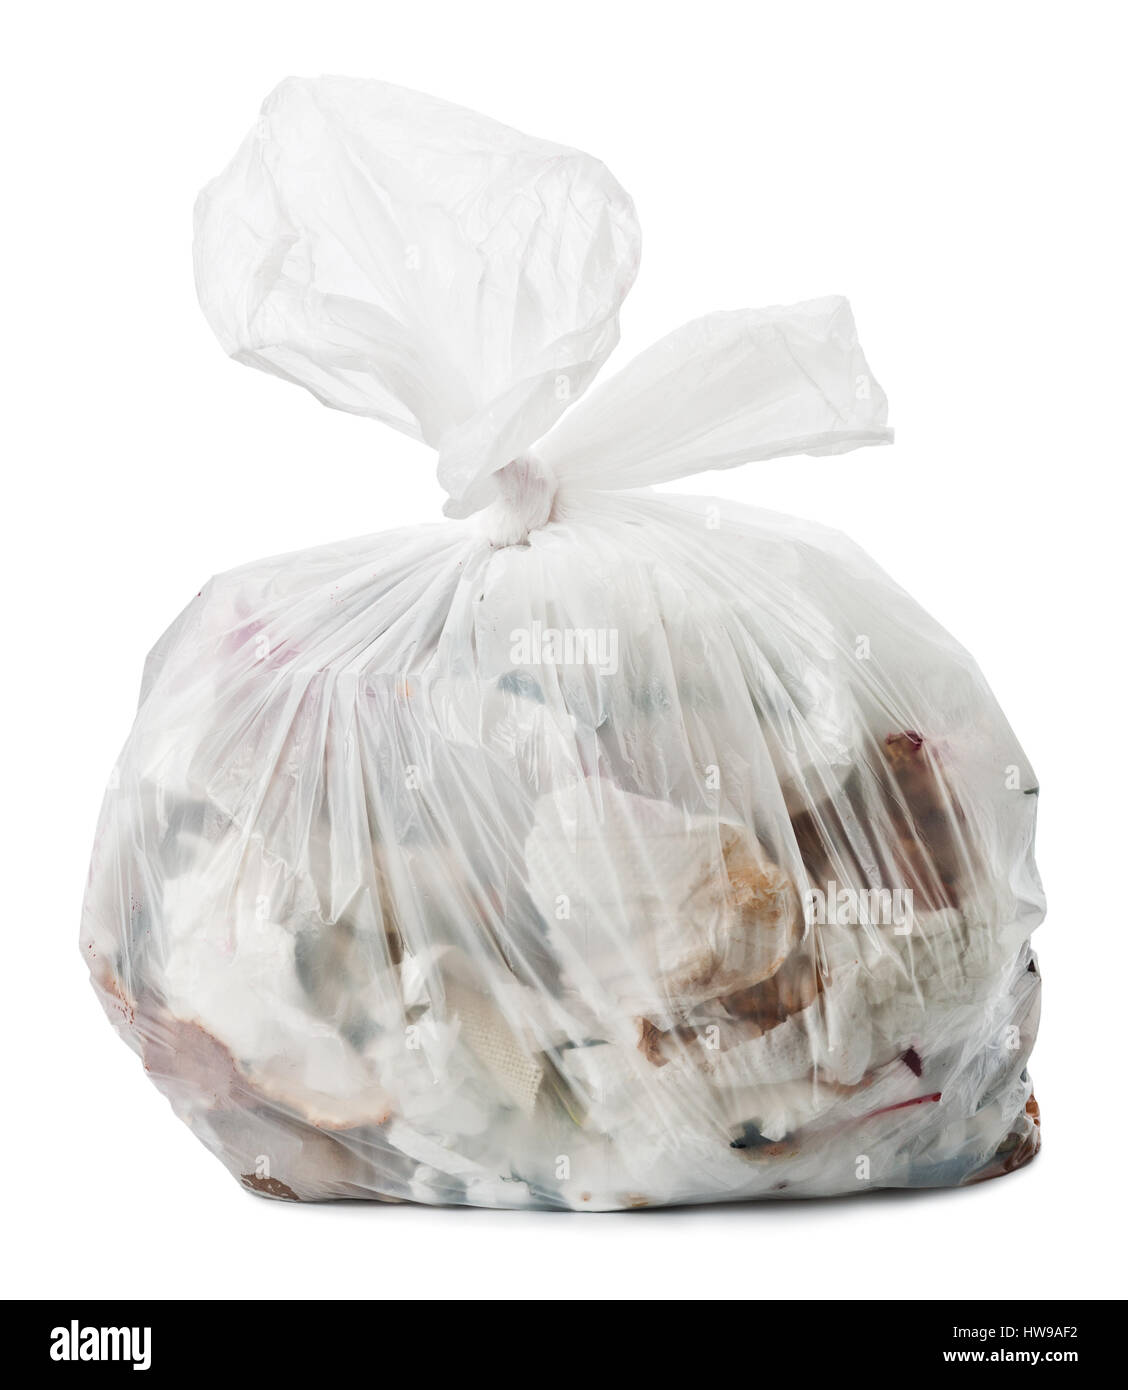 Plastic trash bag on white background Stock Photo - Alamy